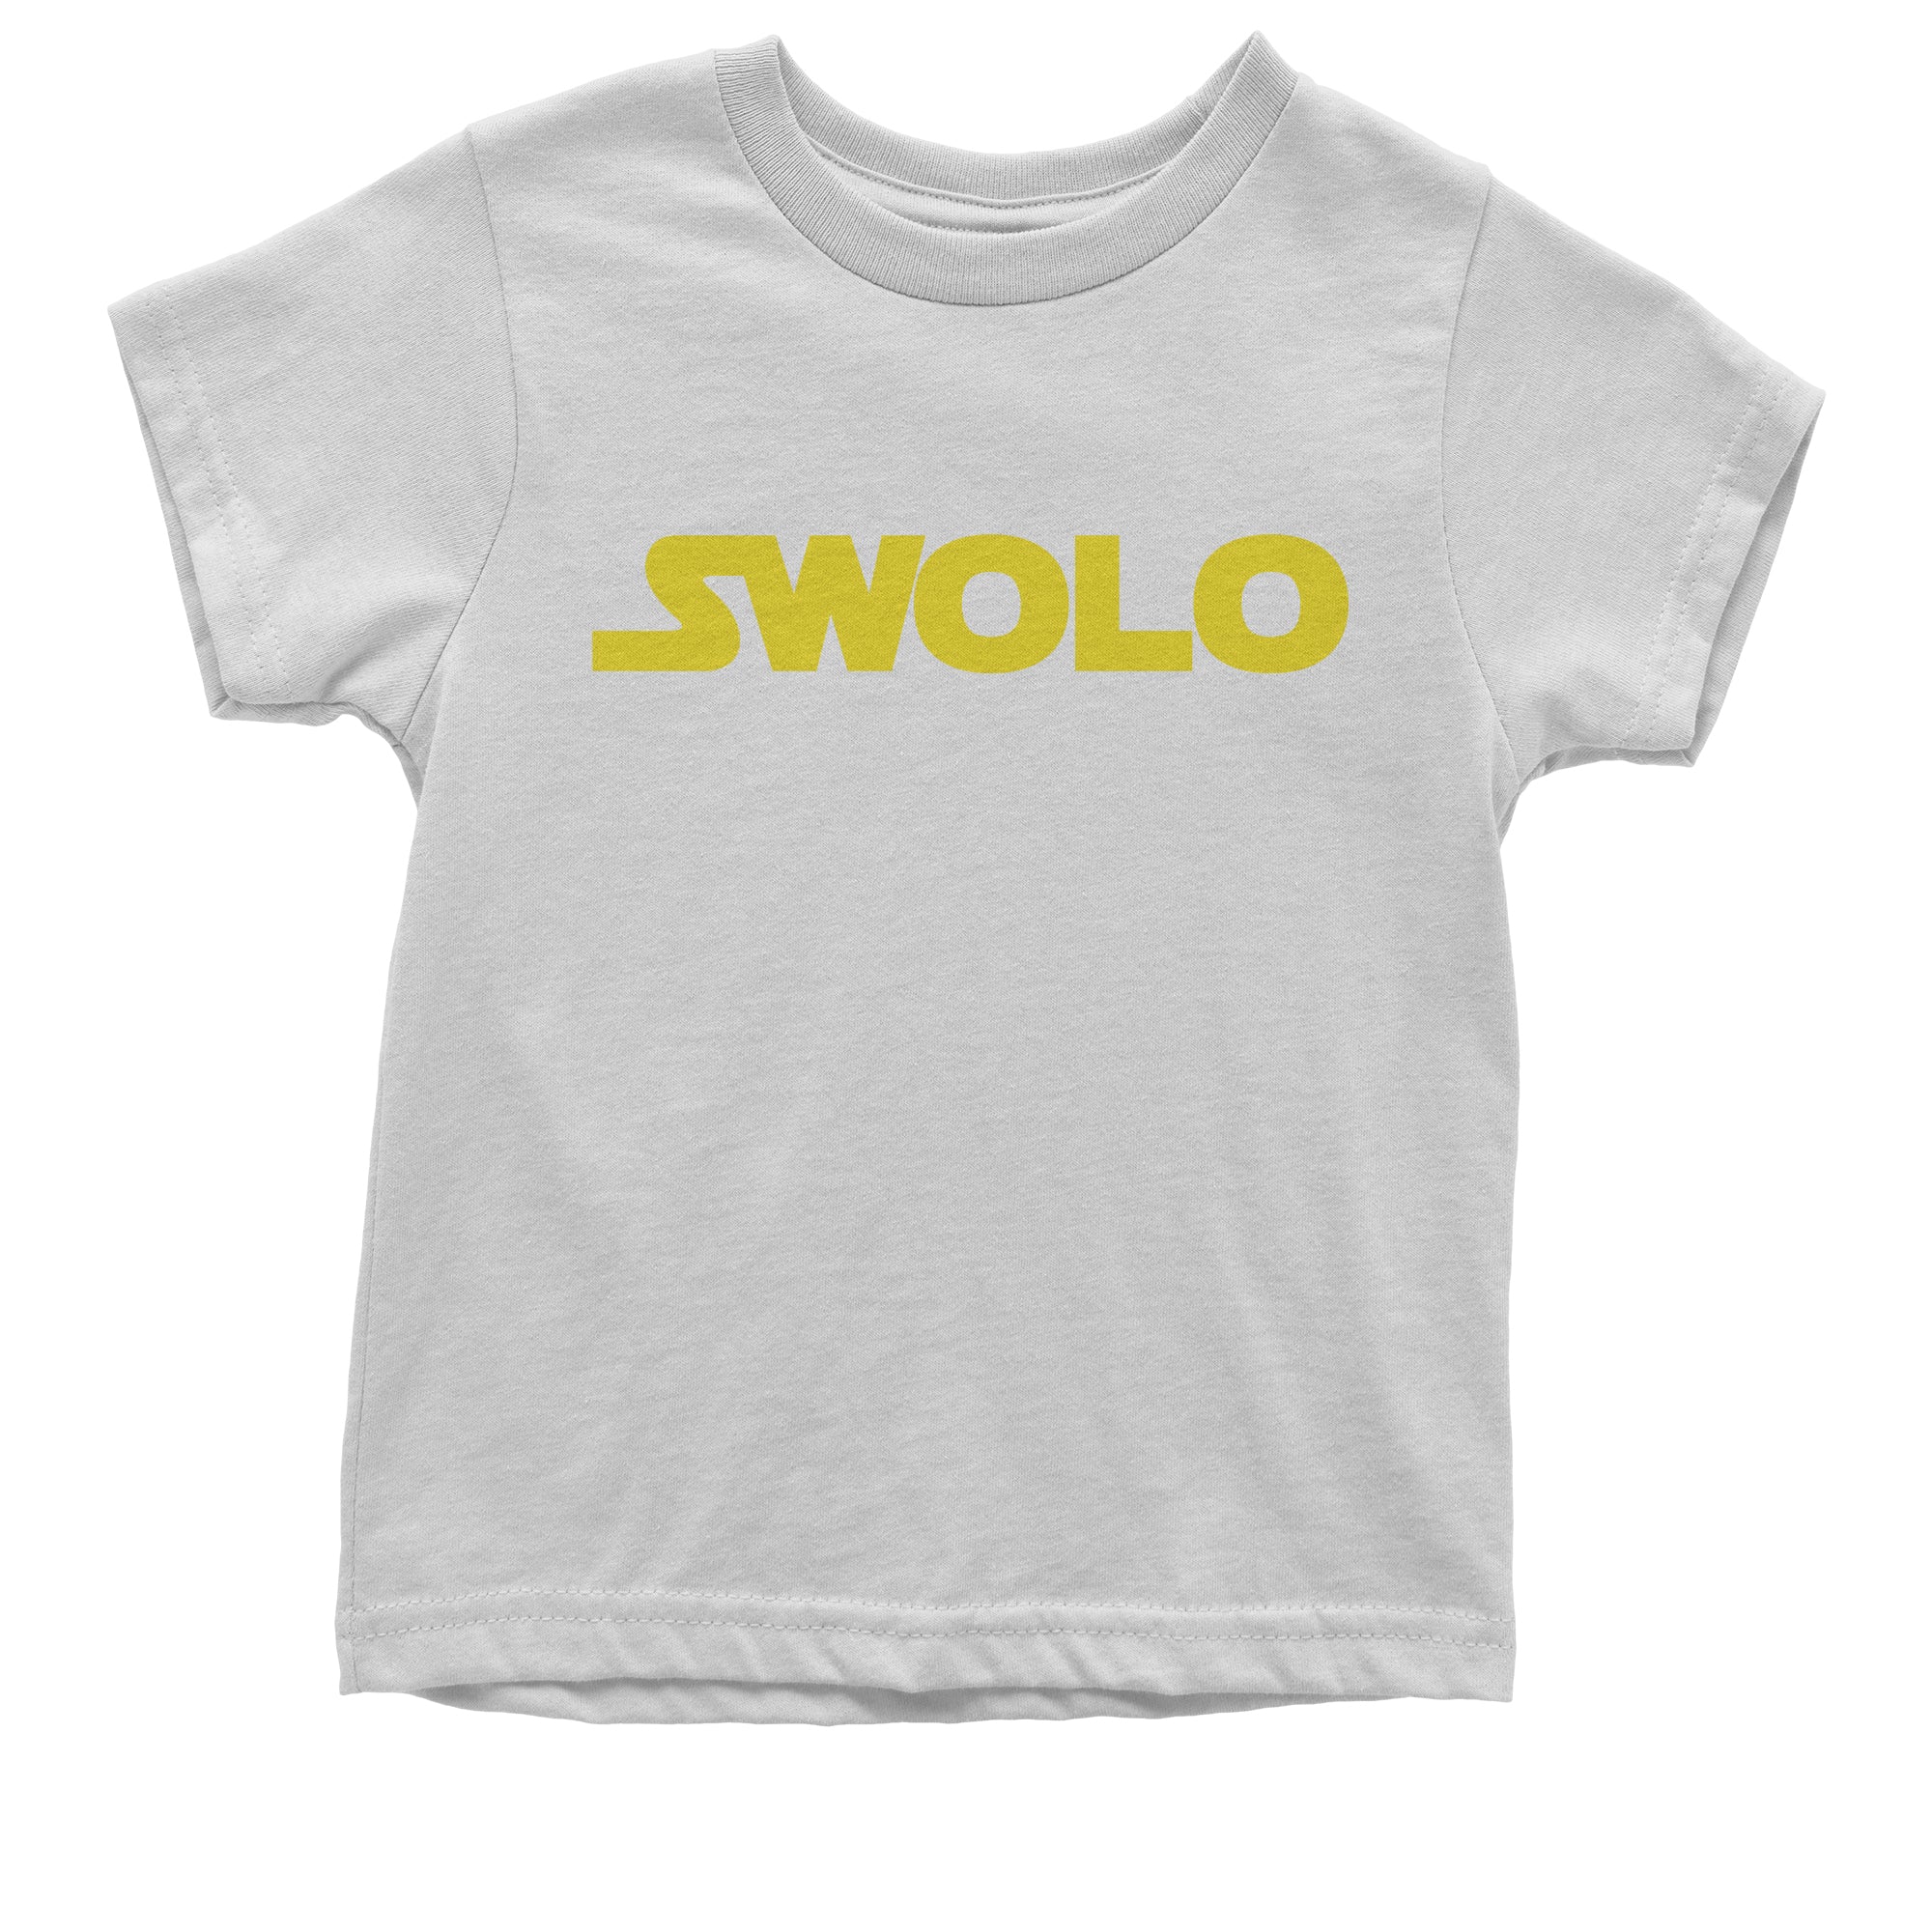 Ben Swolo Star Warship Funny Parody Kid's T-Shirt